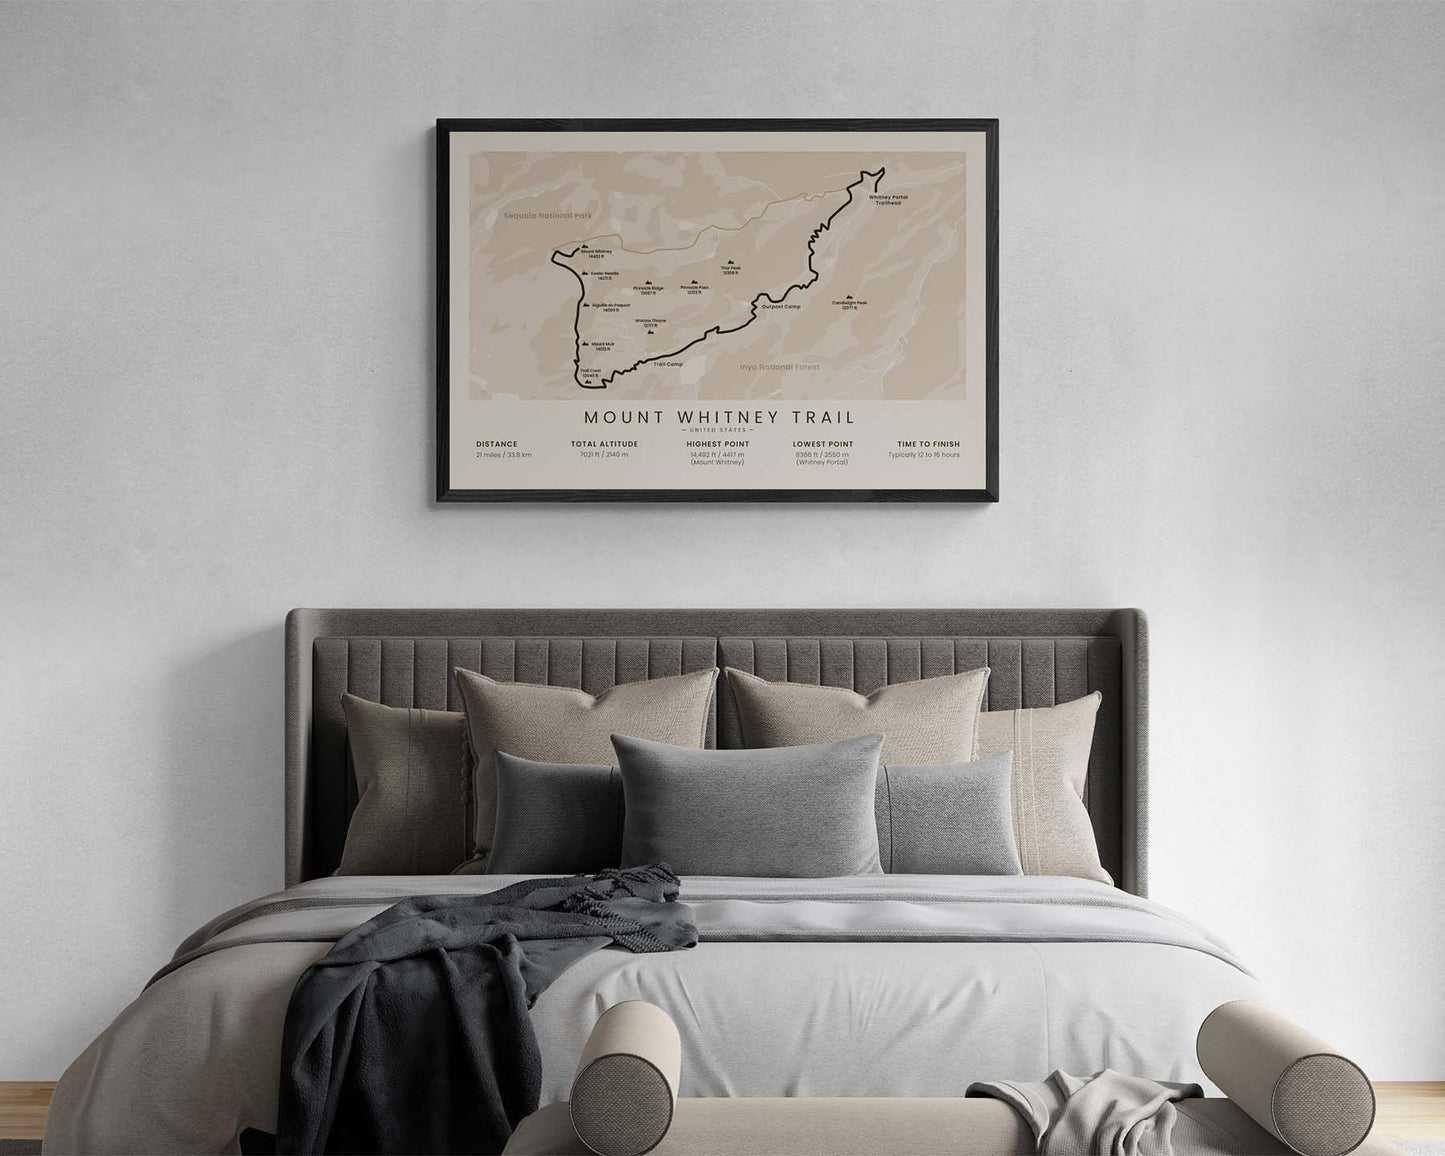 Mount Whitney Hike (Sierra Nevada) Map Poster in minimal room decor